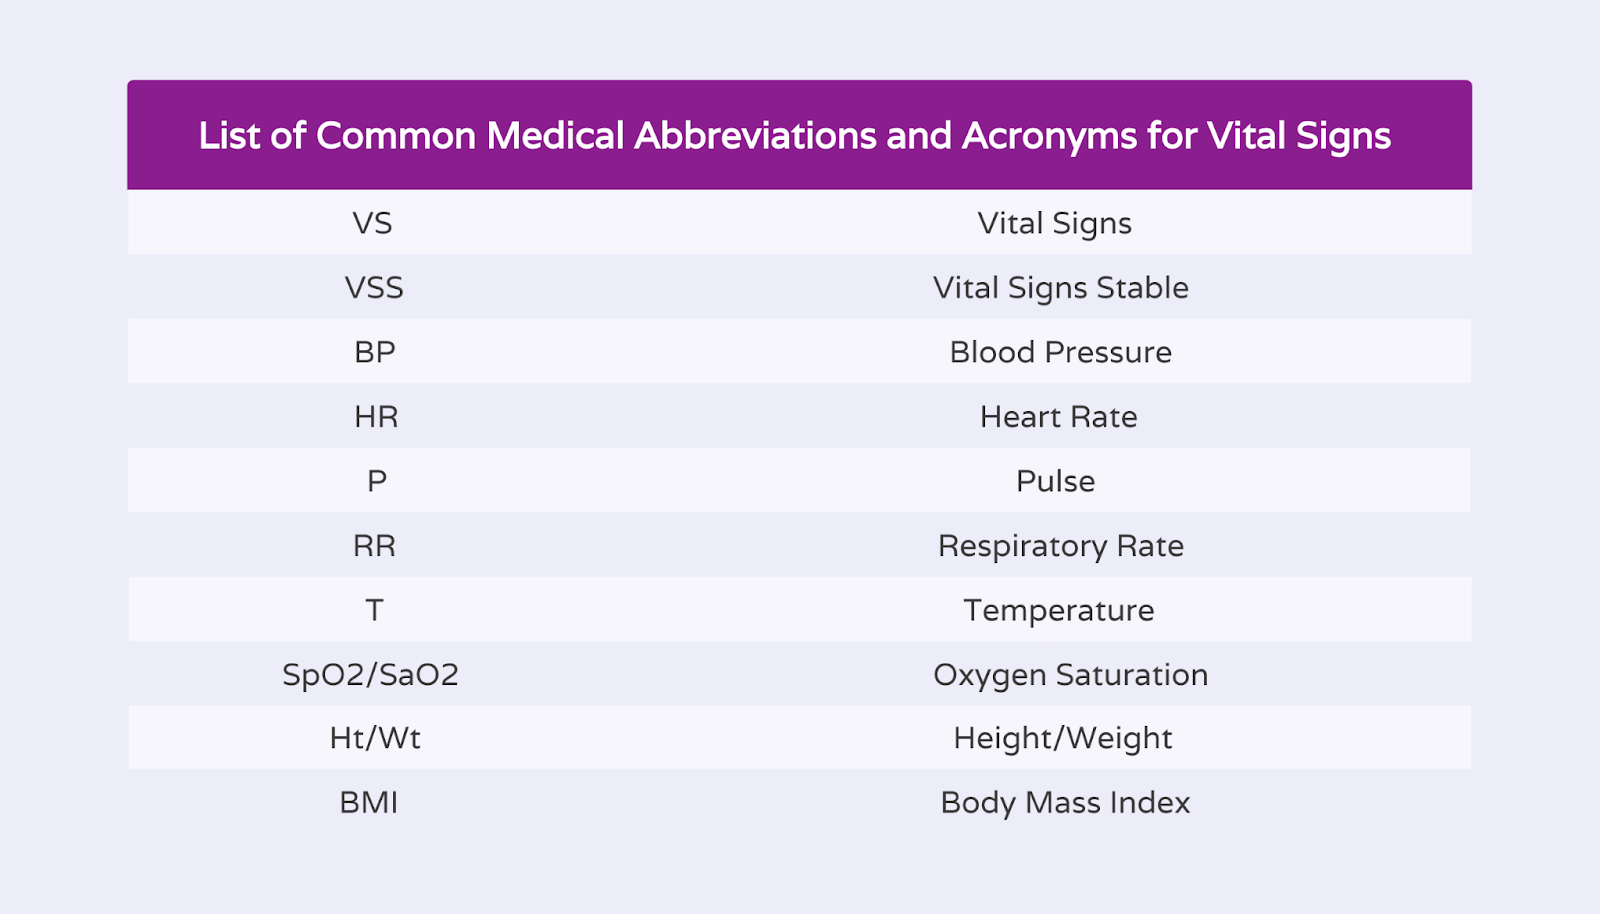 List of vital signs abbreviations